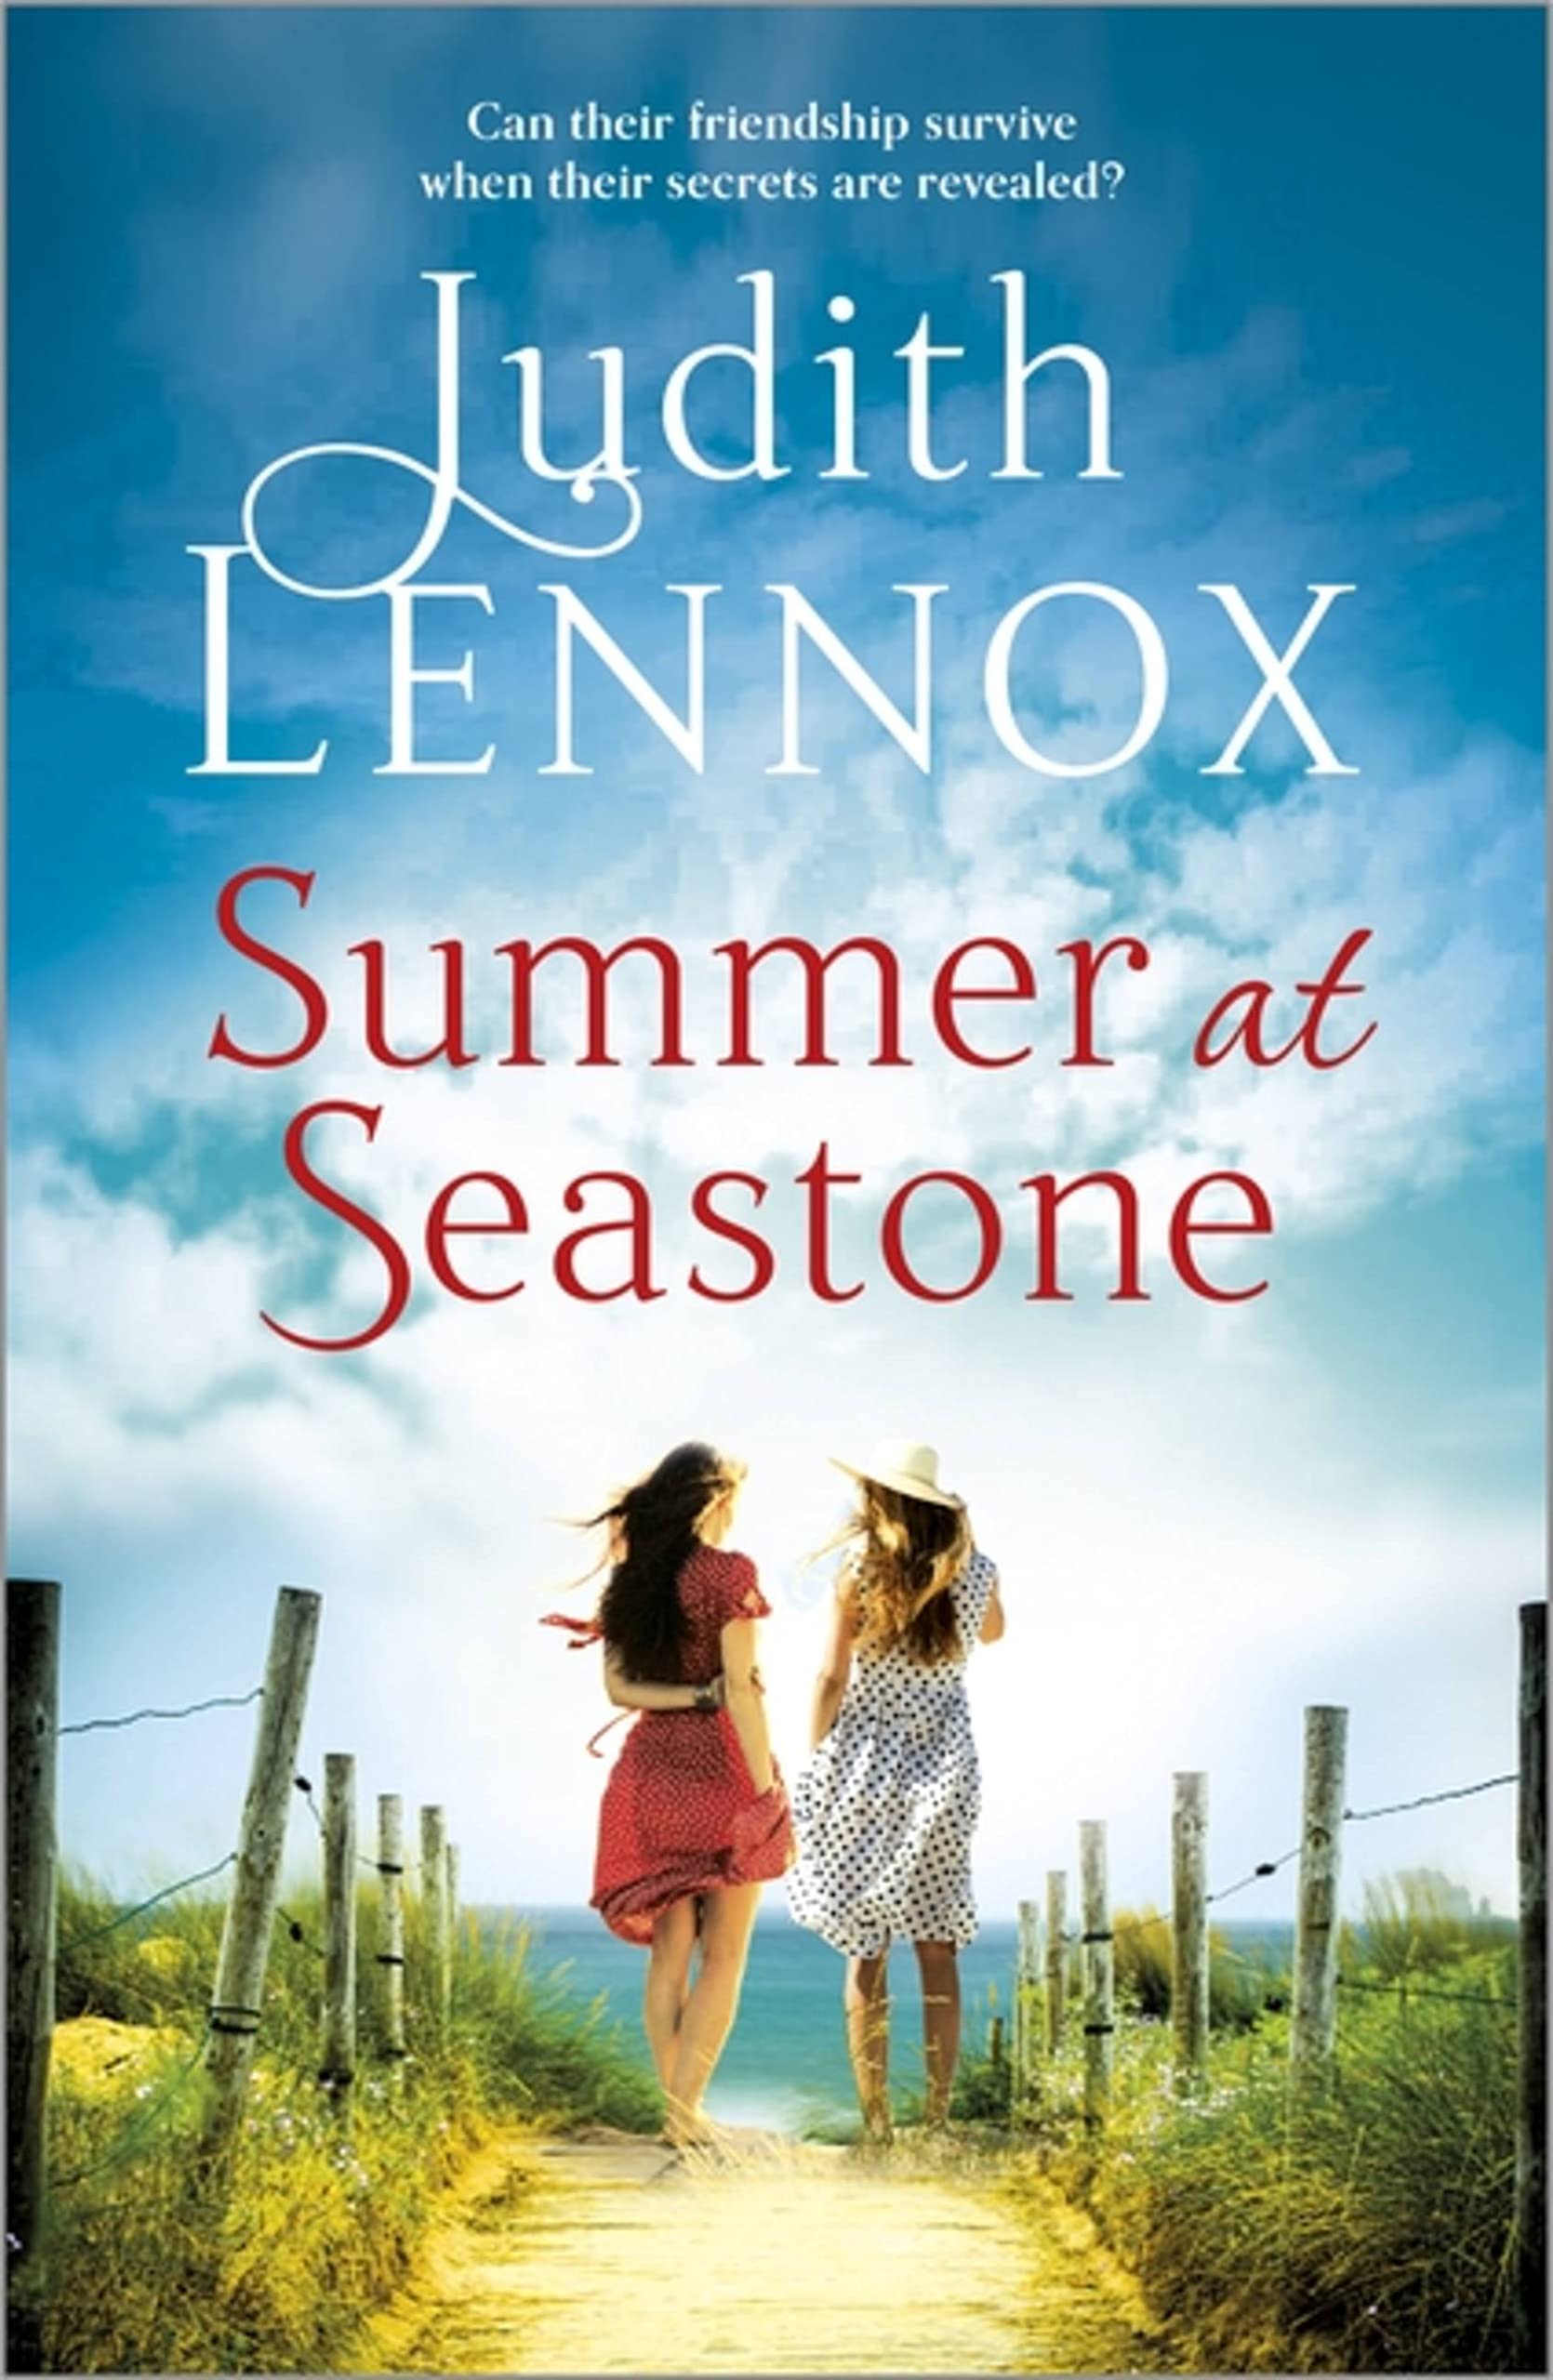 Summer at Seastone by Judith Lennox.